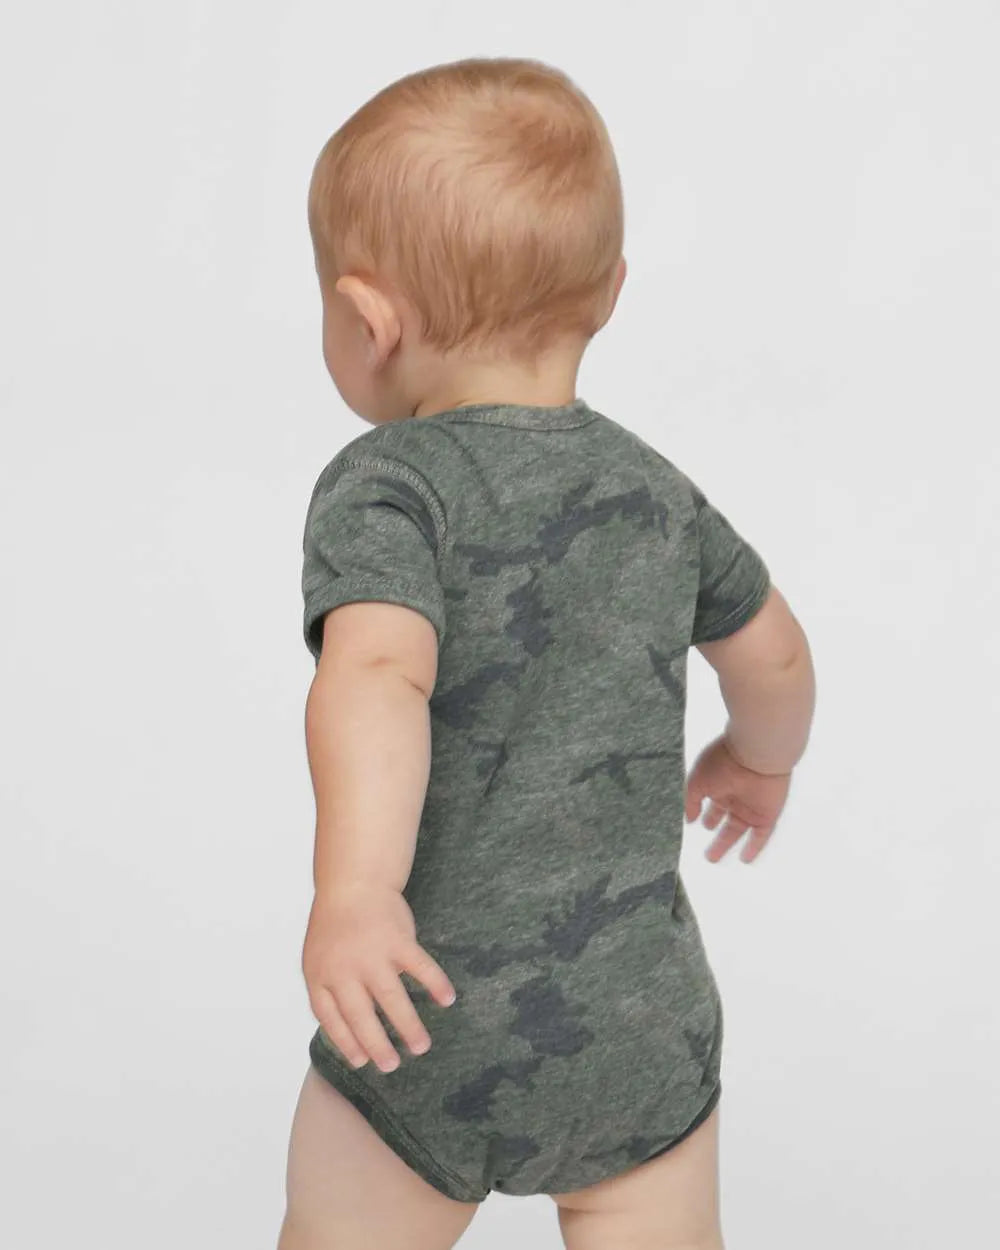 Infant Fine Jersey Bodysuit - 4424 - Print Me Shirts